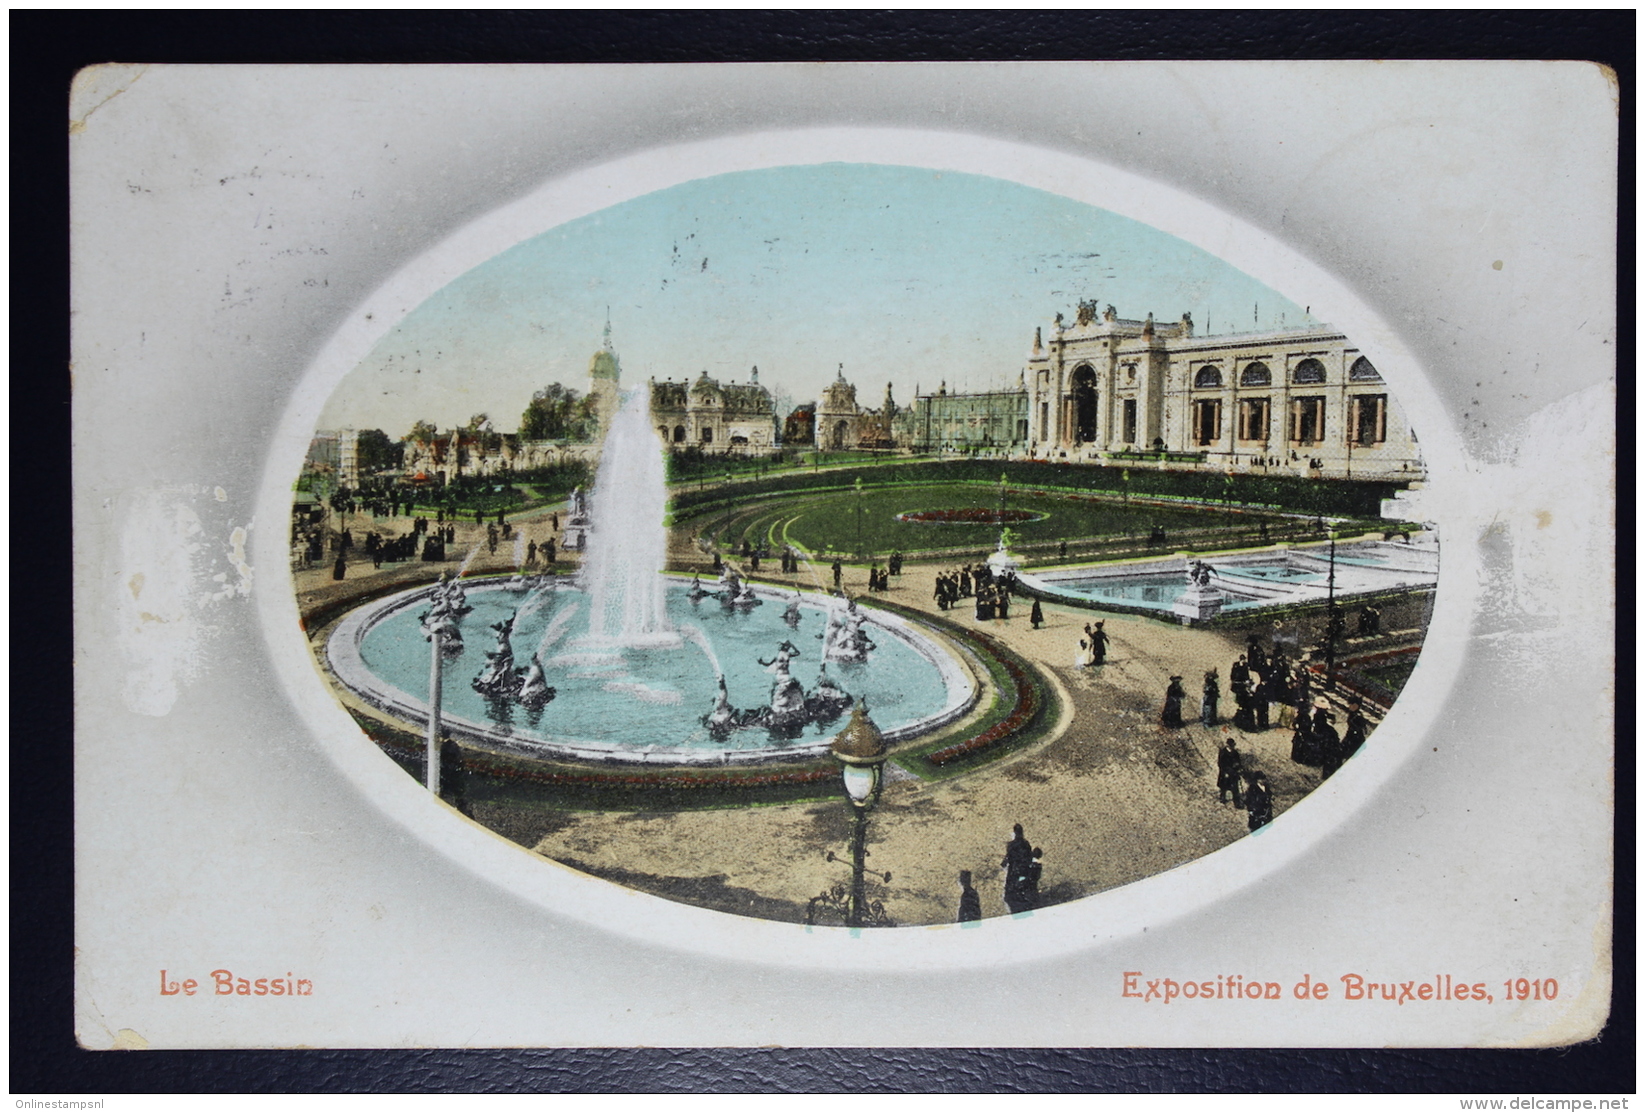 Belgium  Postcard 1910 OPB Nrs 88 - 91 + 74  Bruxelles To Düsseldorf - 1910-1911 Caritas